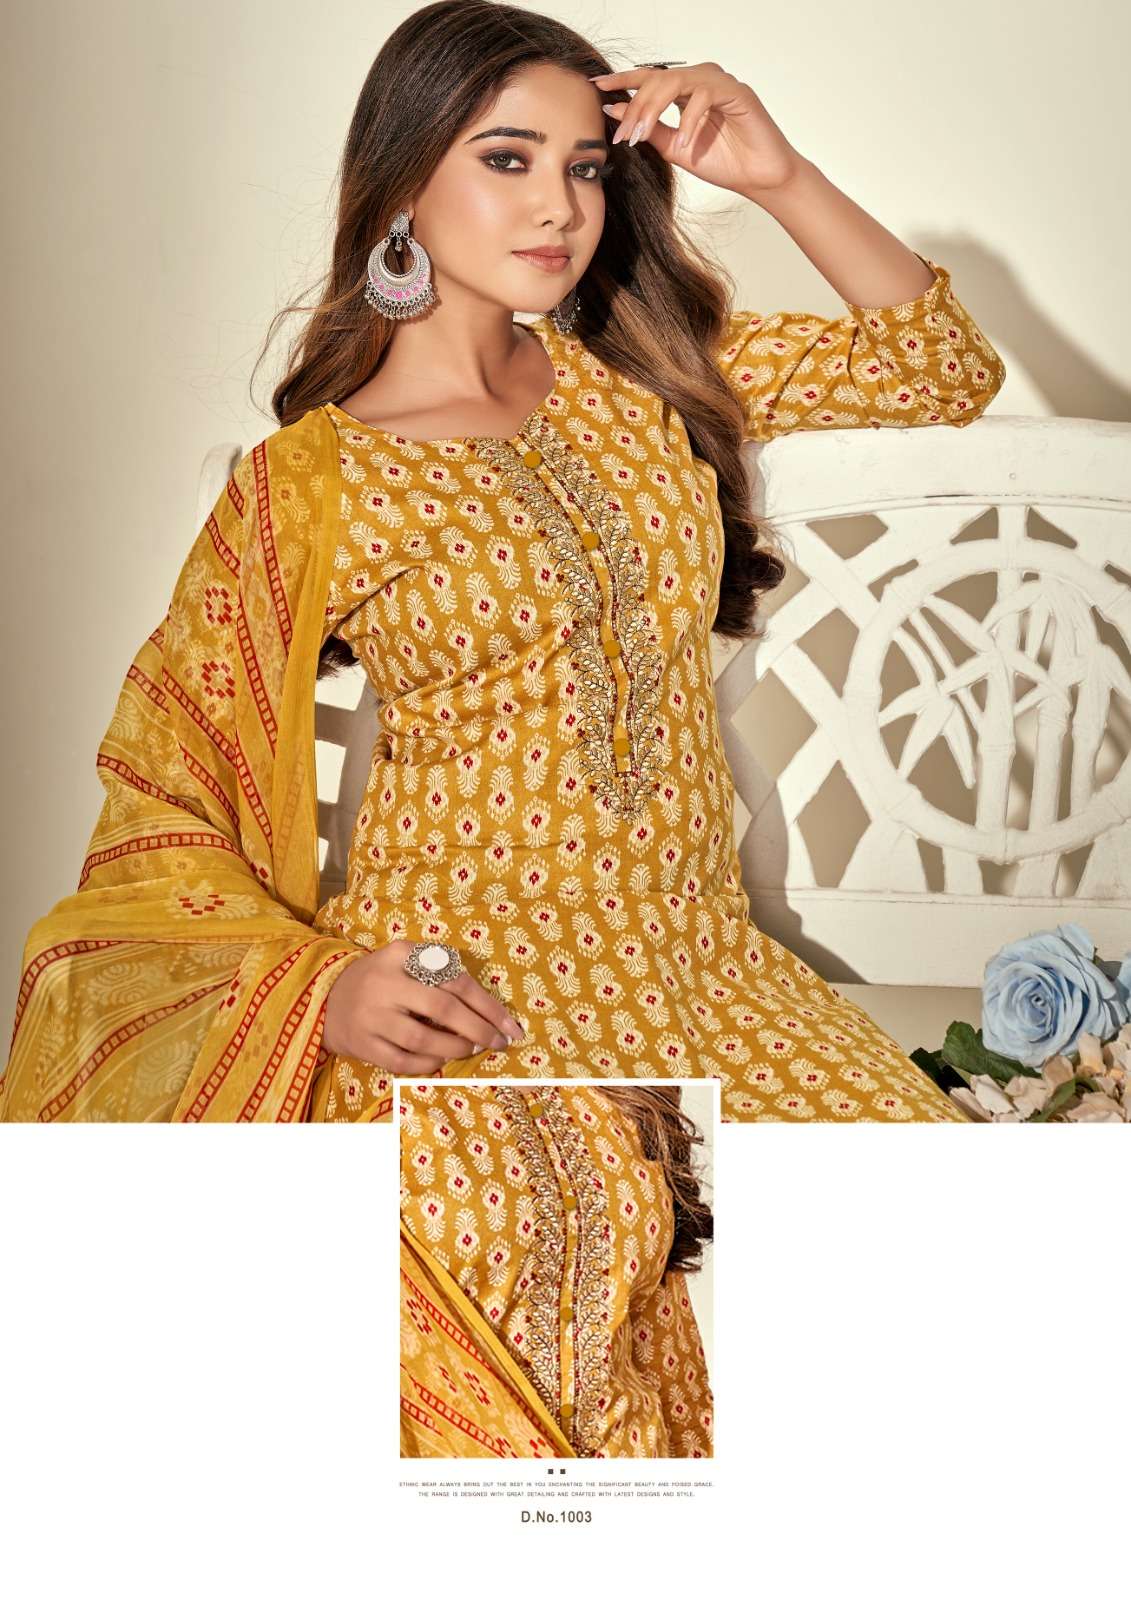 kavyakala couture shagun 1001-1004 series indian designer dress material catalogue latest catalogue in surat